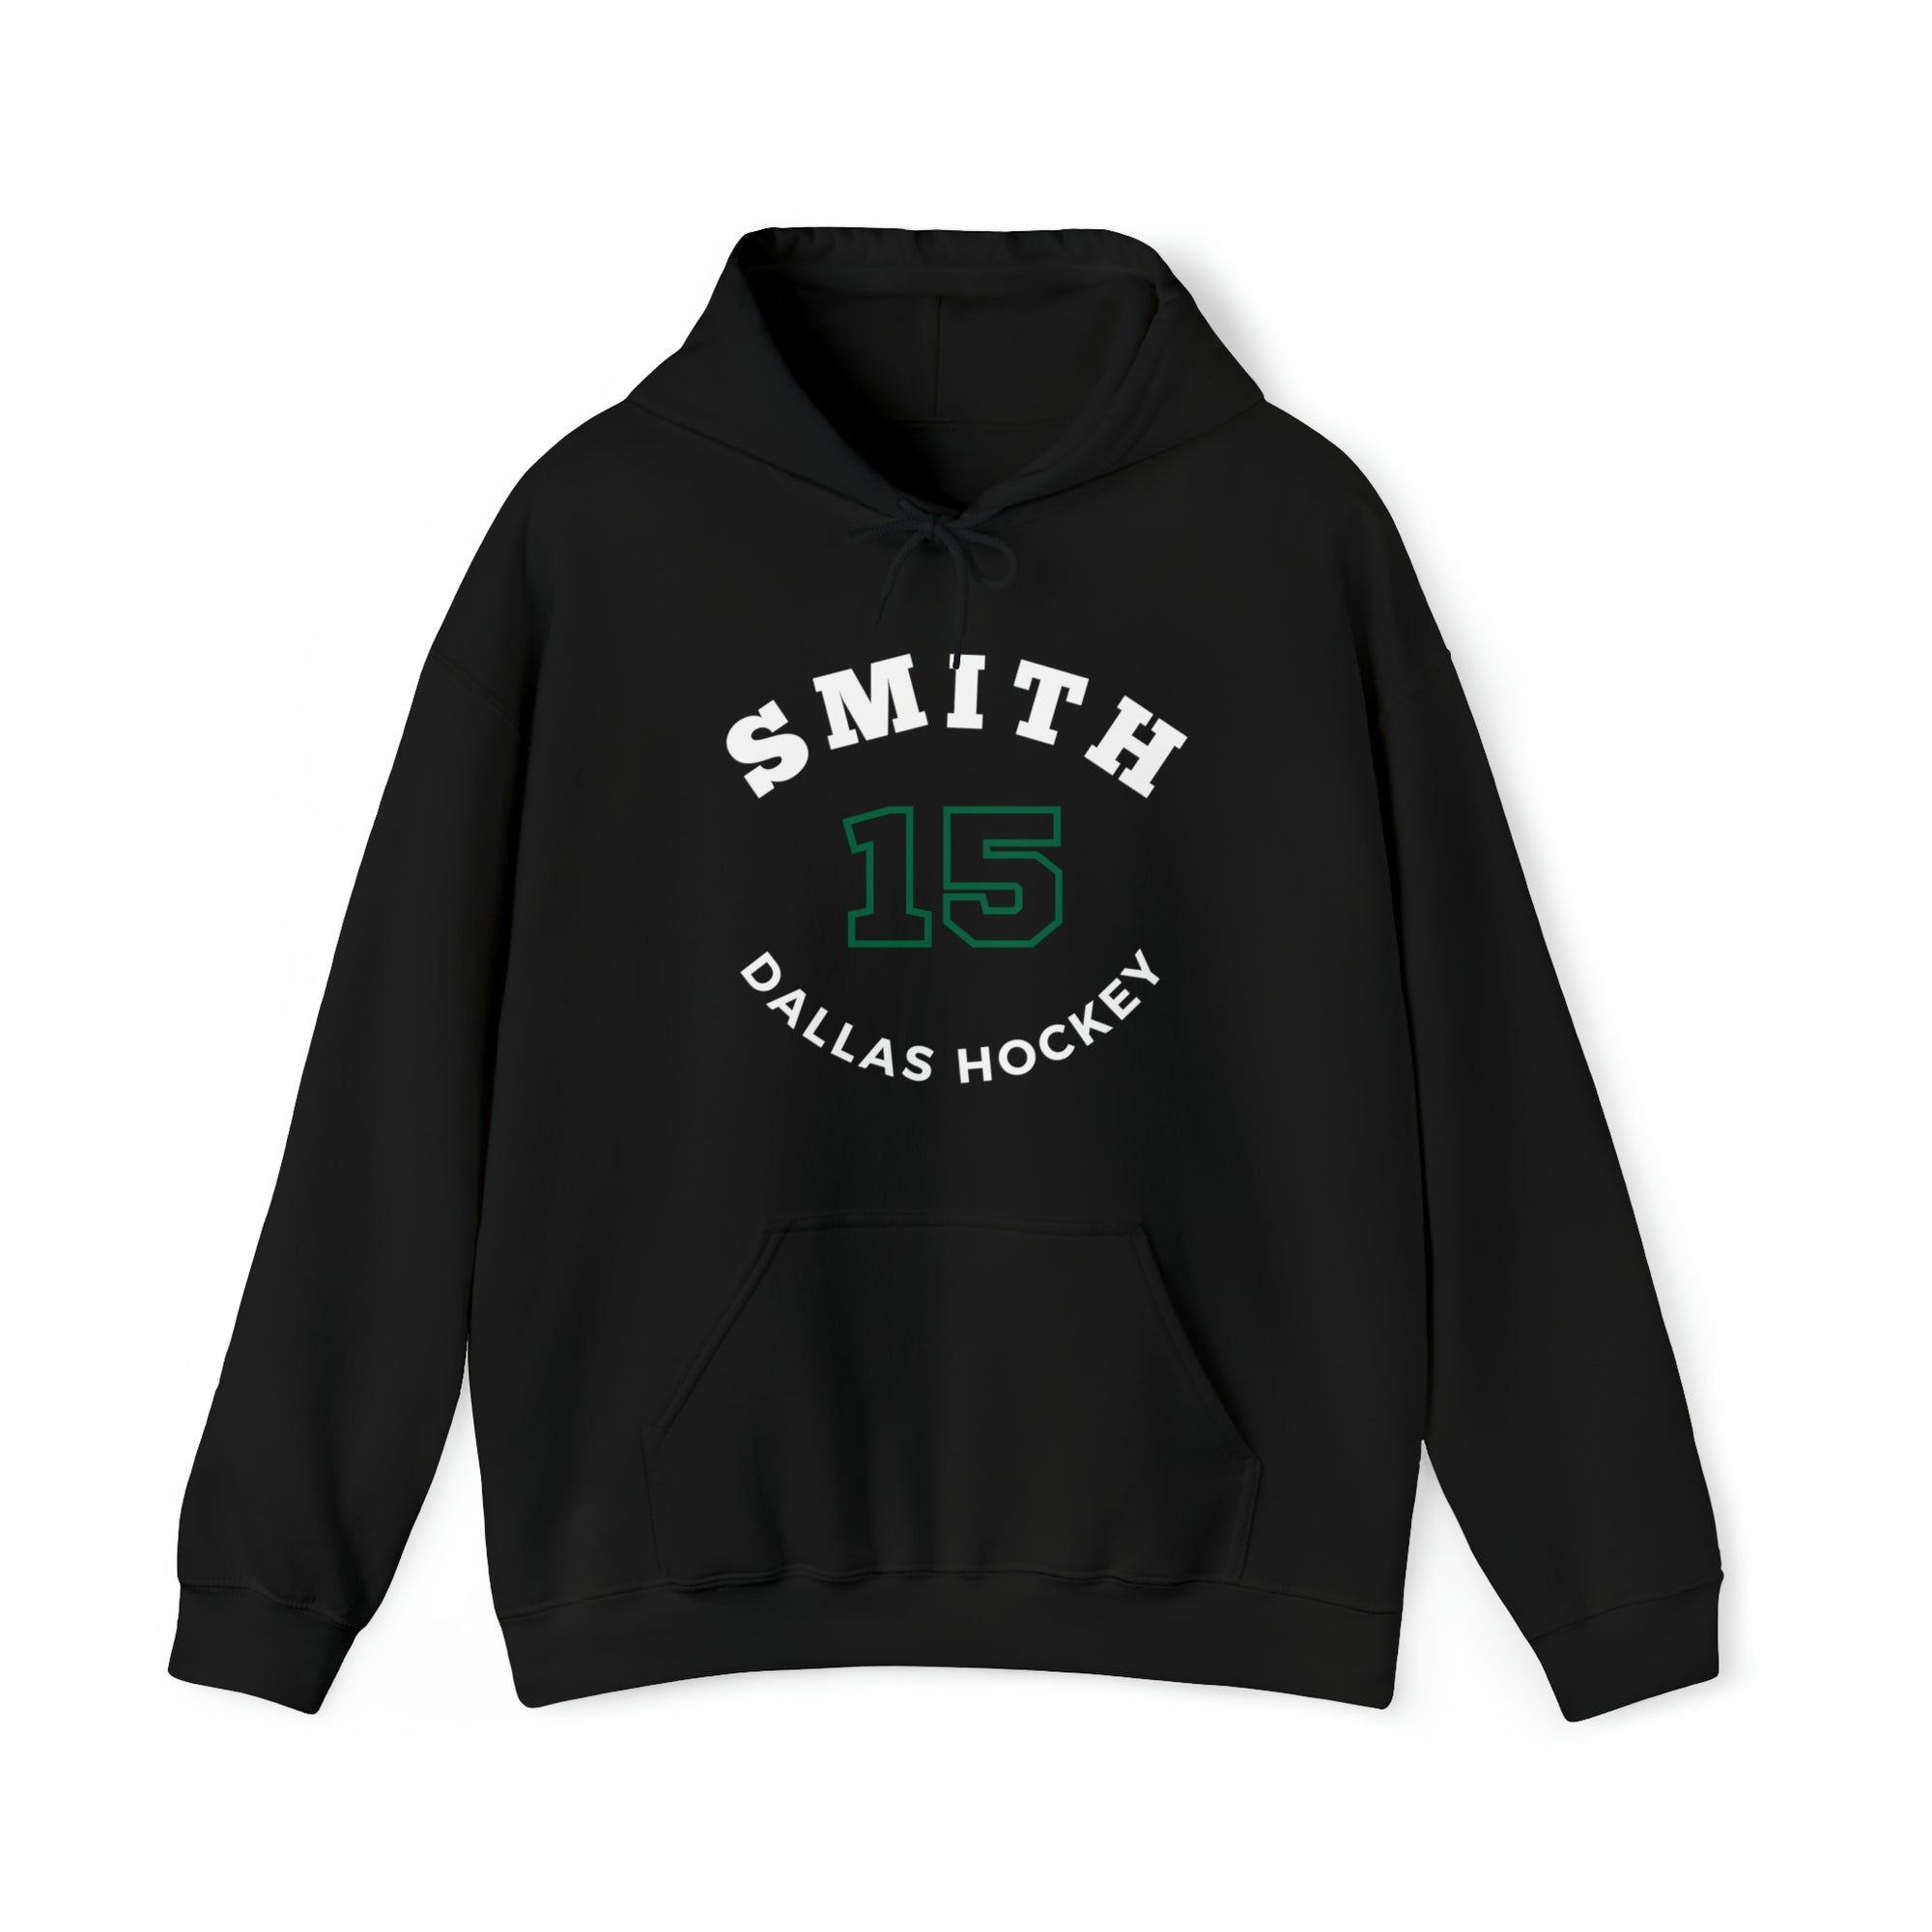 Smith 15 Dallas Hockey Number Arch Design Unisex Hooded Sweatshirt